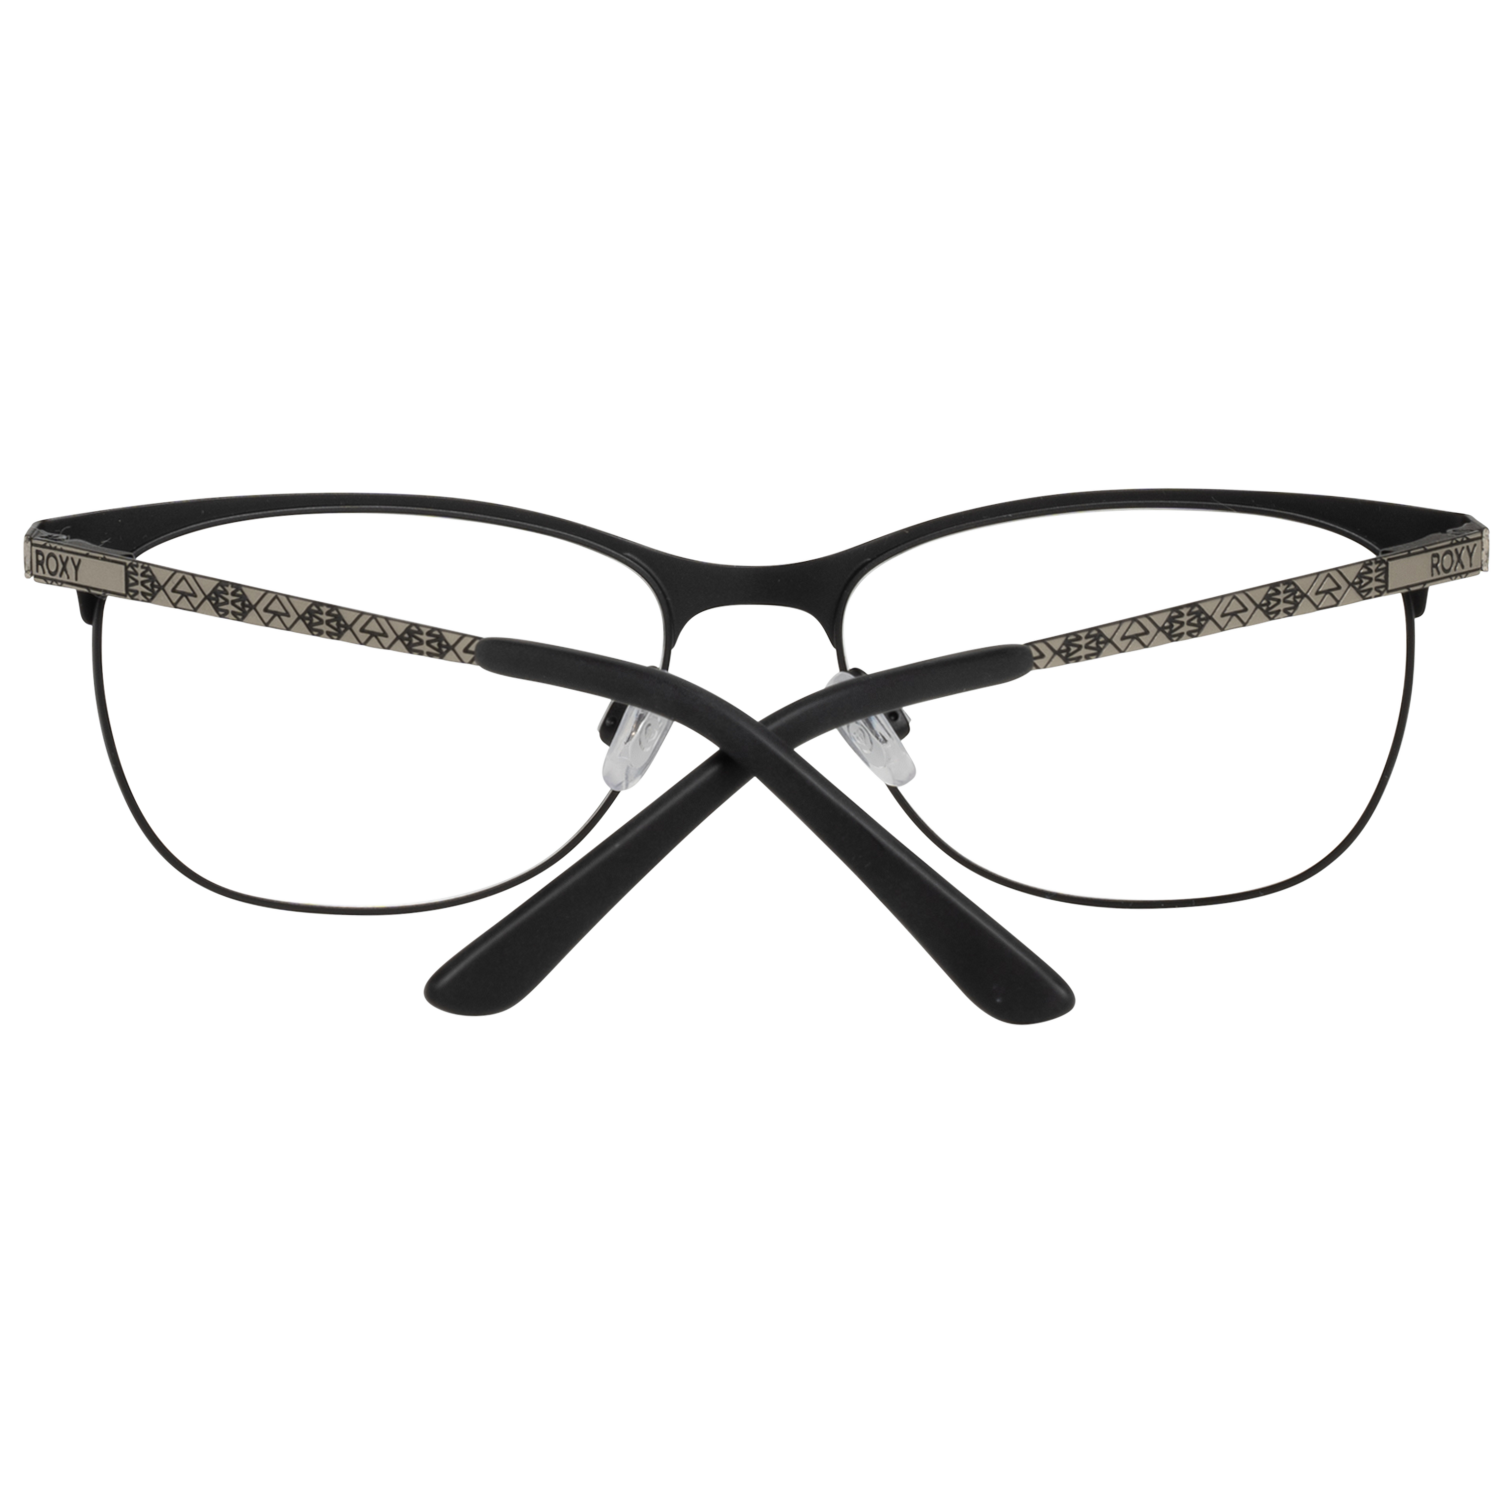 Roxy Frames Roxy Glasses Optical Frame ERJEG03044 SJA0 53 Eyeglasses Eyewear UK USA Australia 